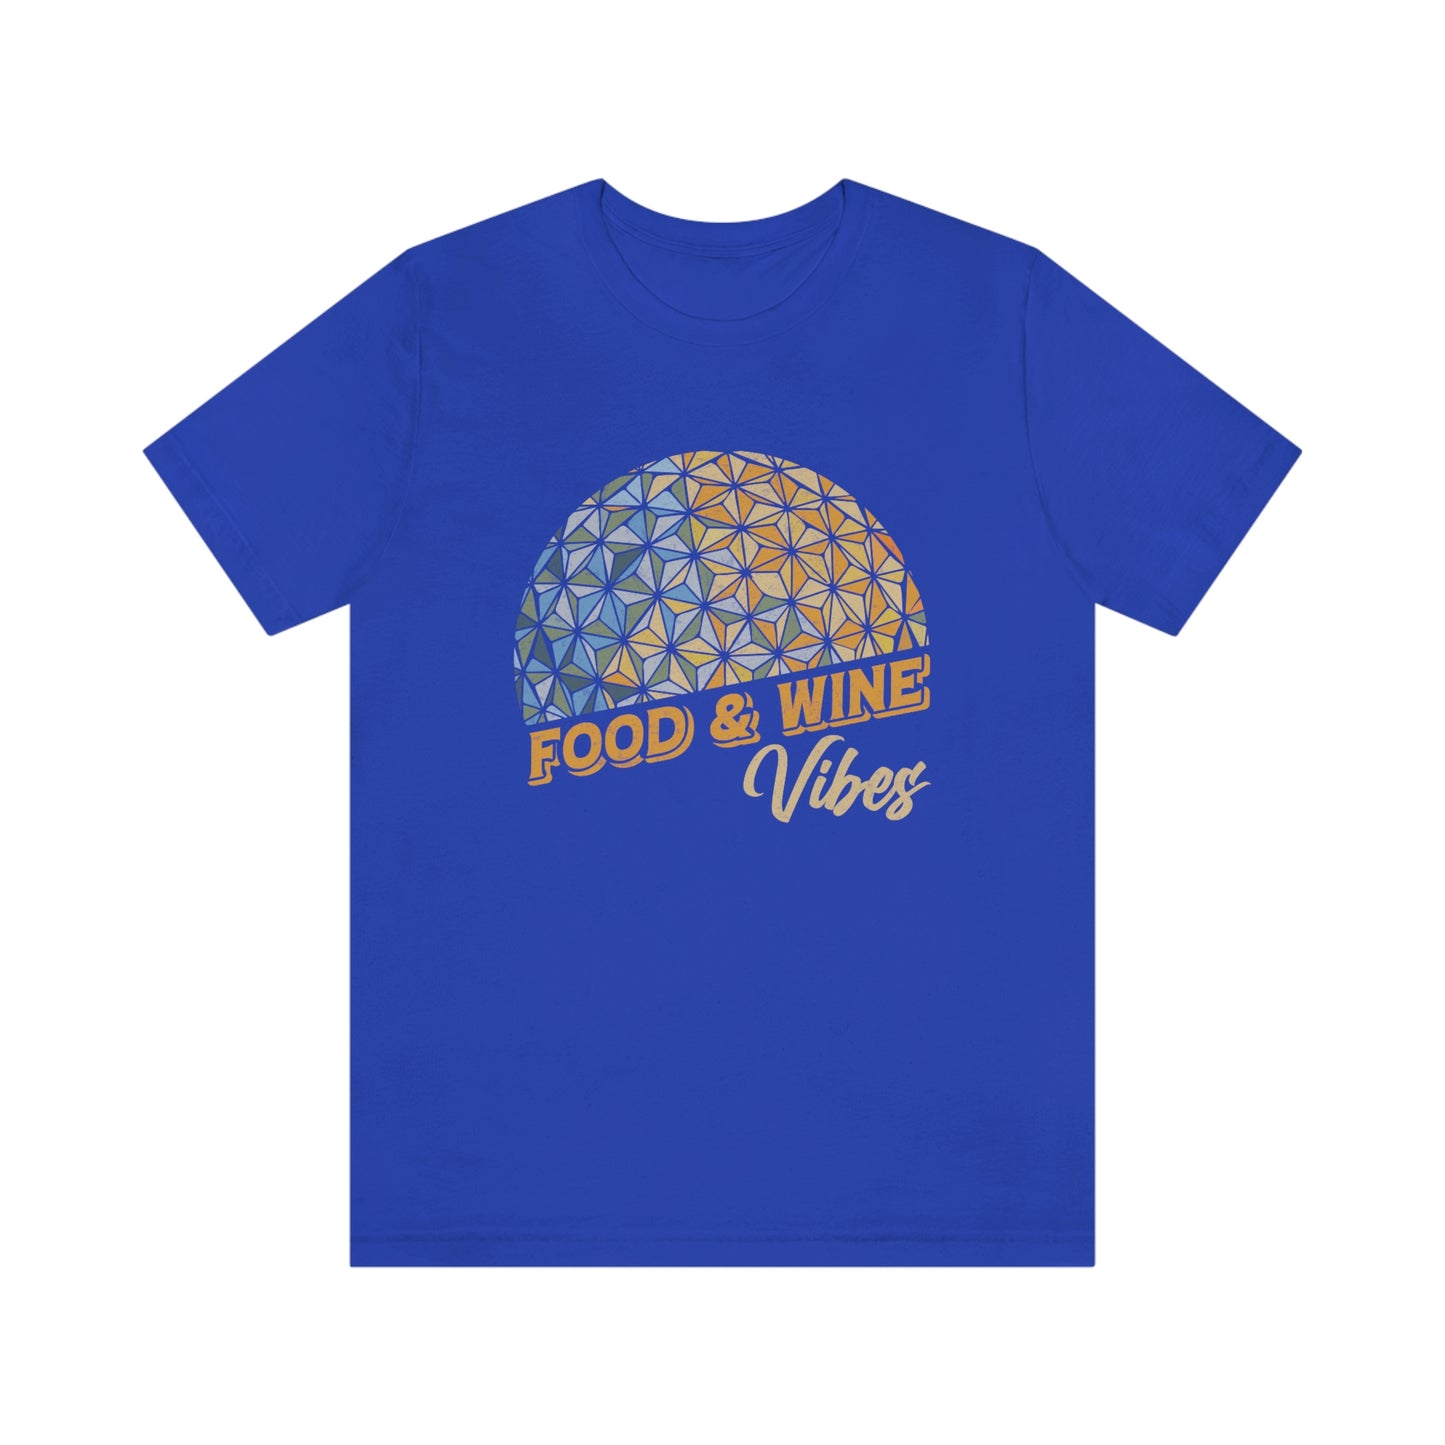 Food & Wine Vibes EPCOT Blue - Adult Unisex Shirt